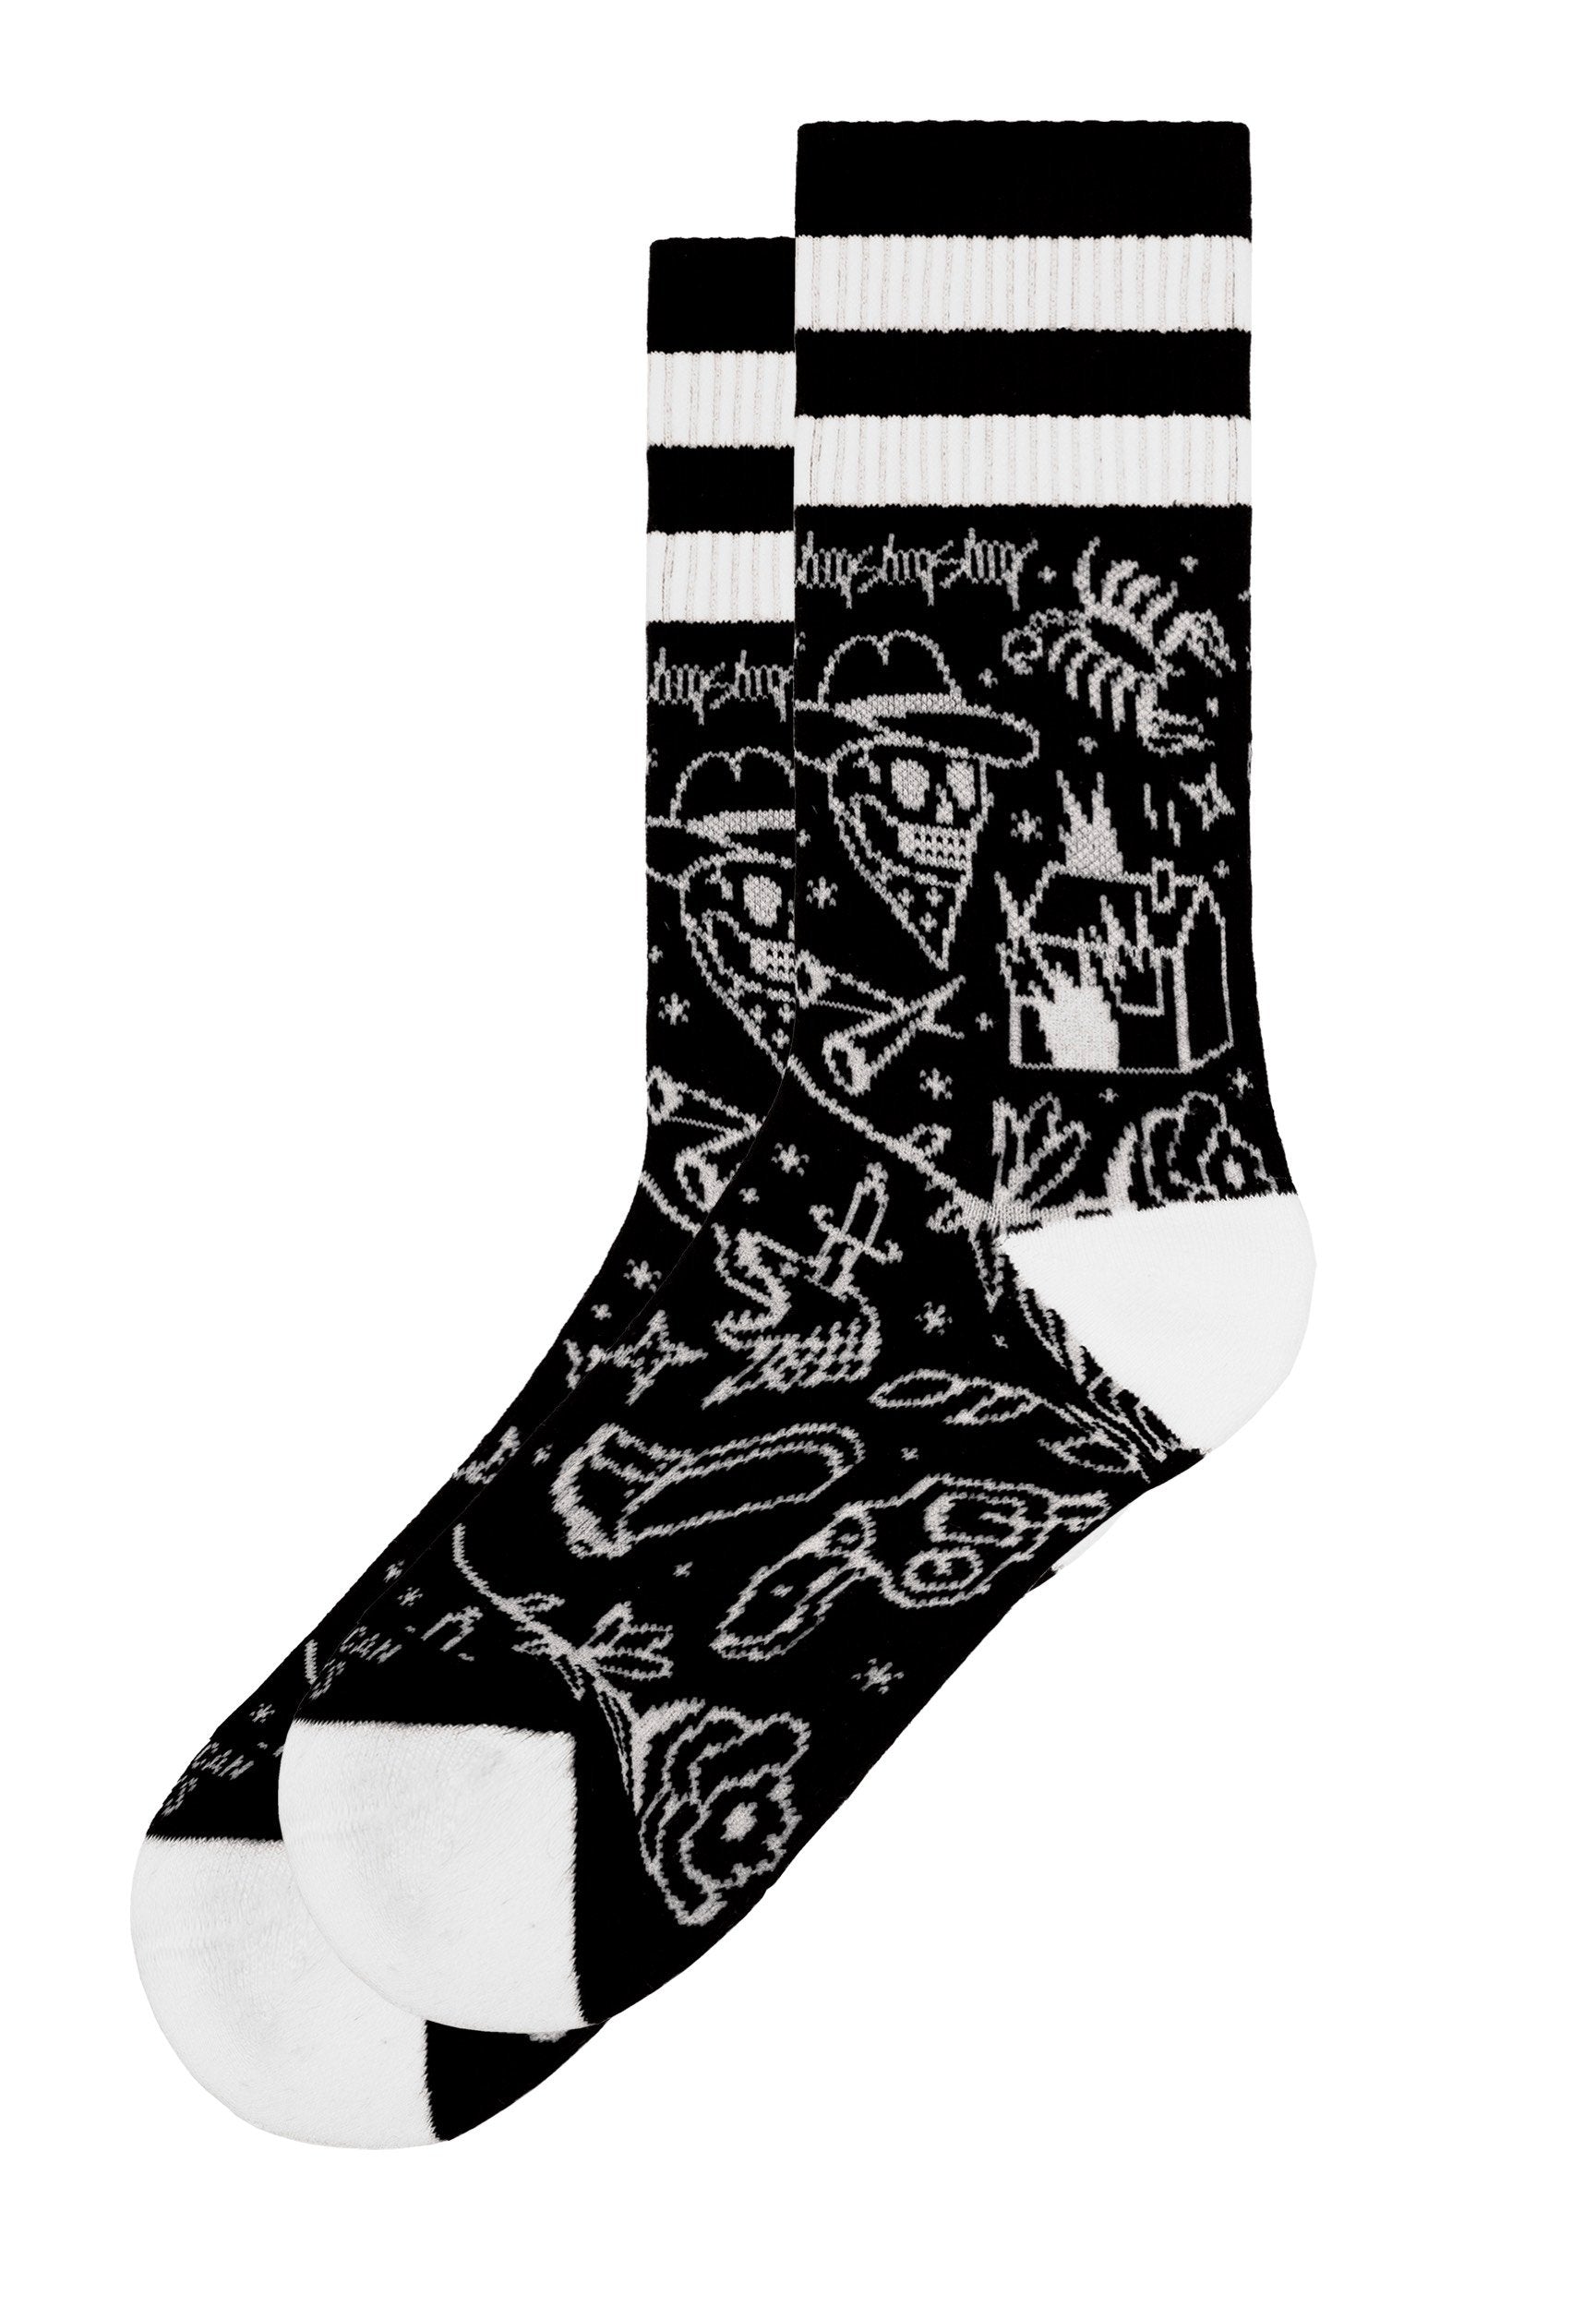 American Socks - Cowboy Mid High Black - Socks